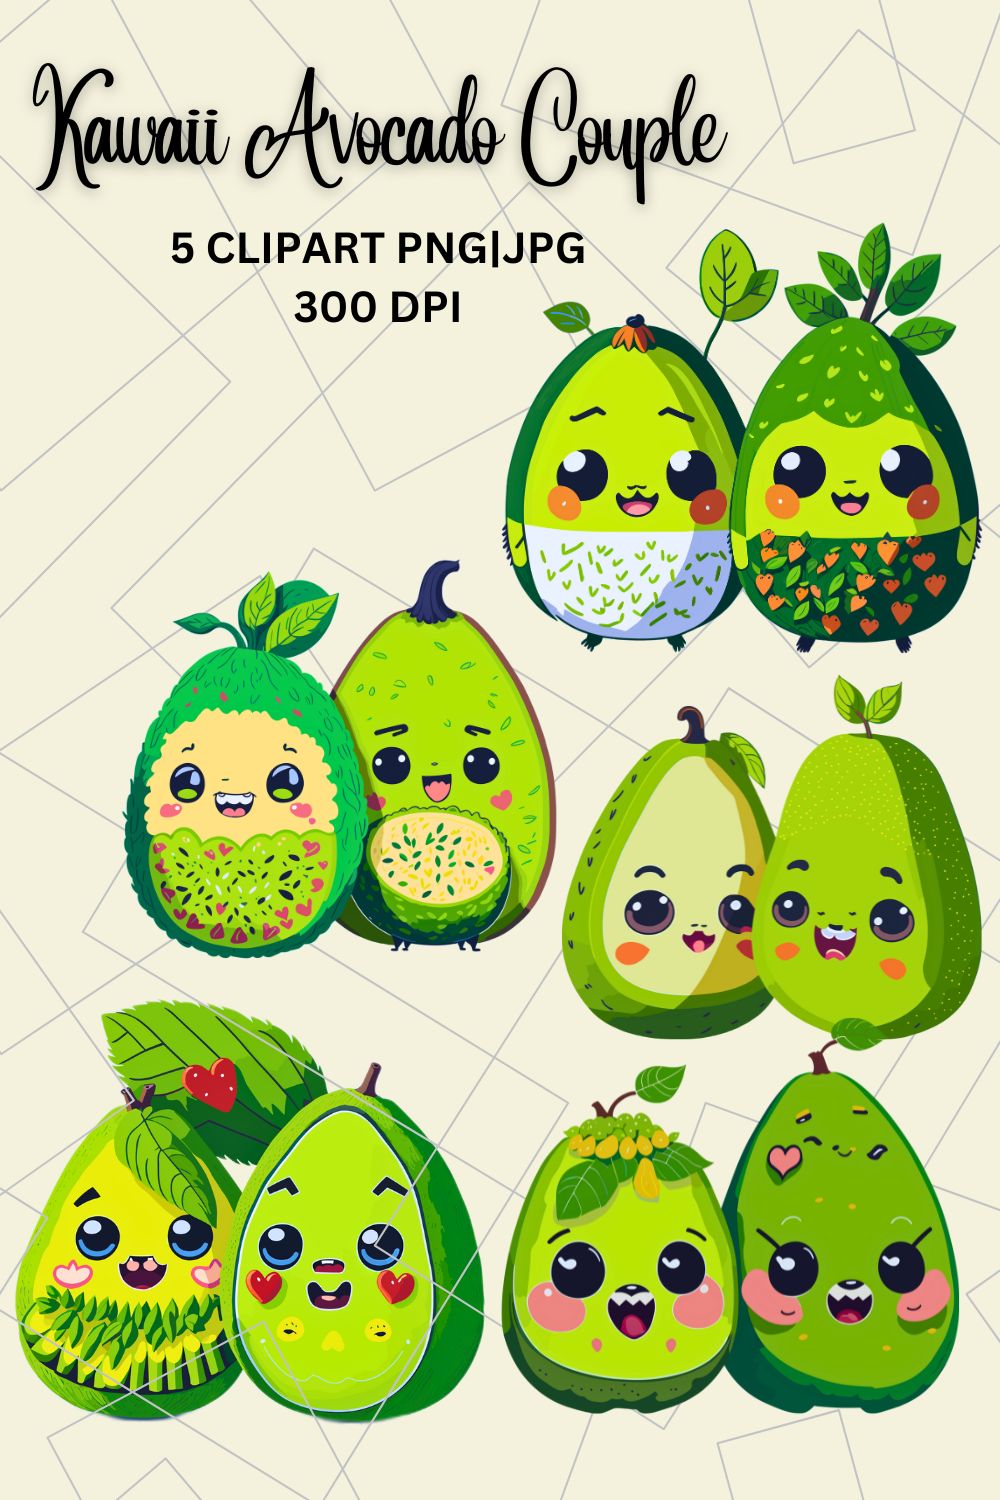 Cute Kawaii Avocado Couple Sublimation Clipart pinterest preview image.